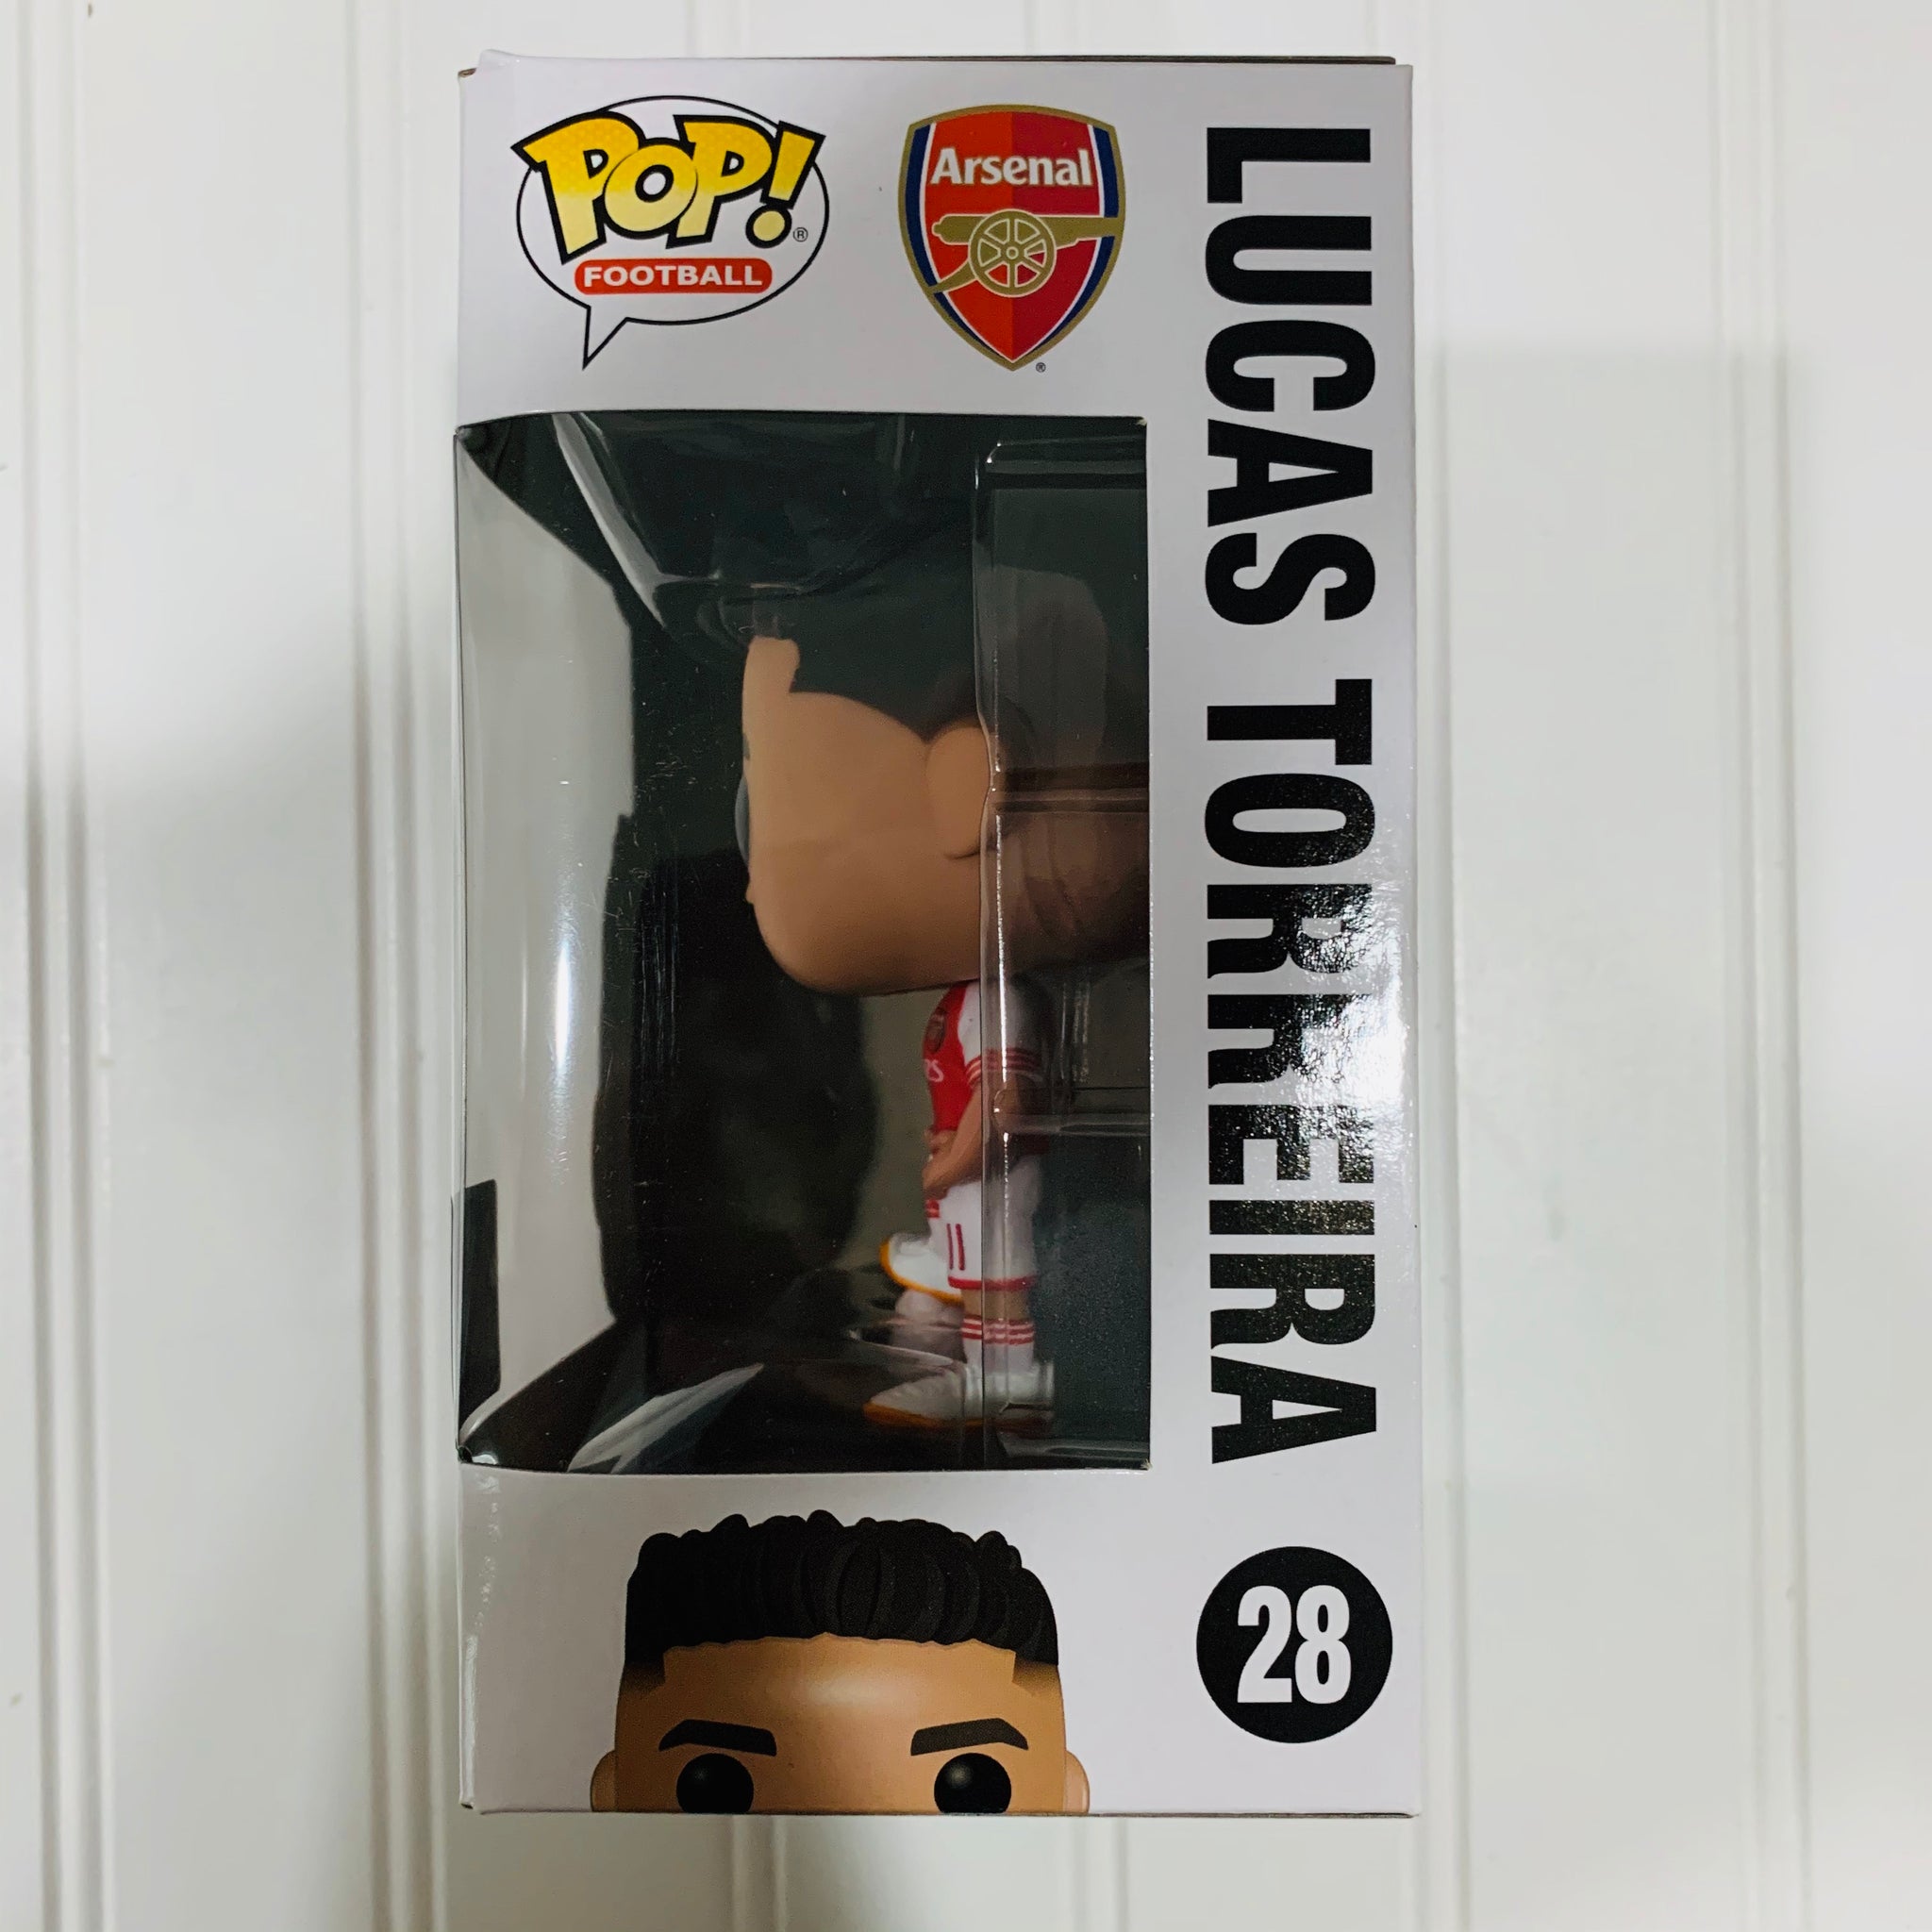 Best pris på Soccerstarz - Arsenal Lucas Torreira Action Figurer